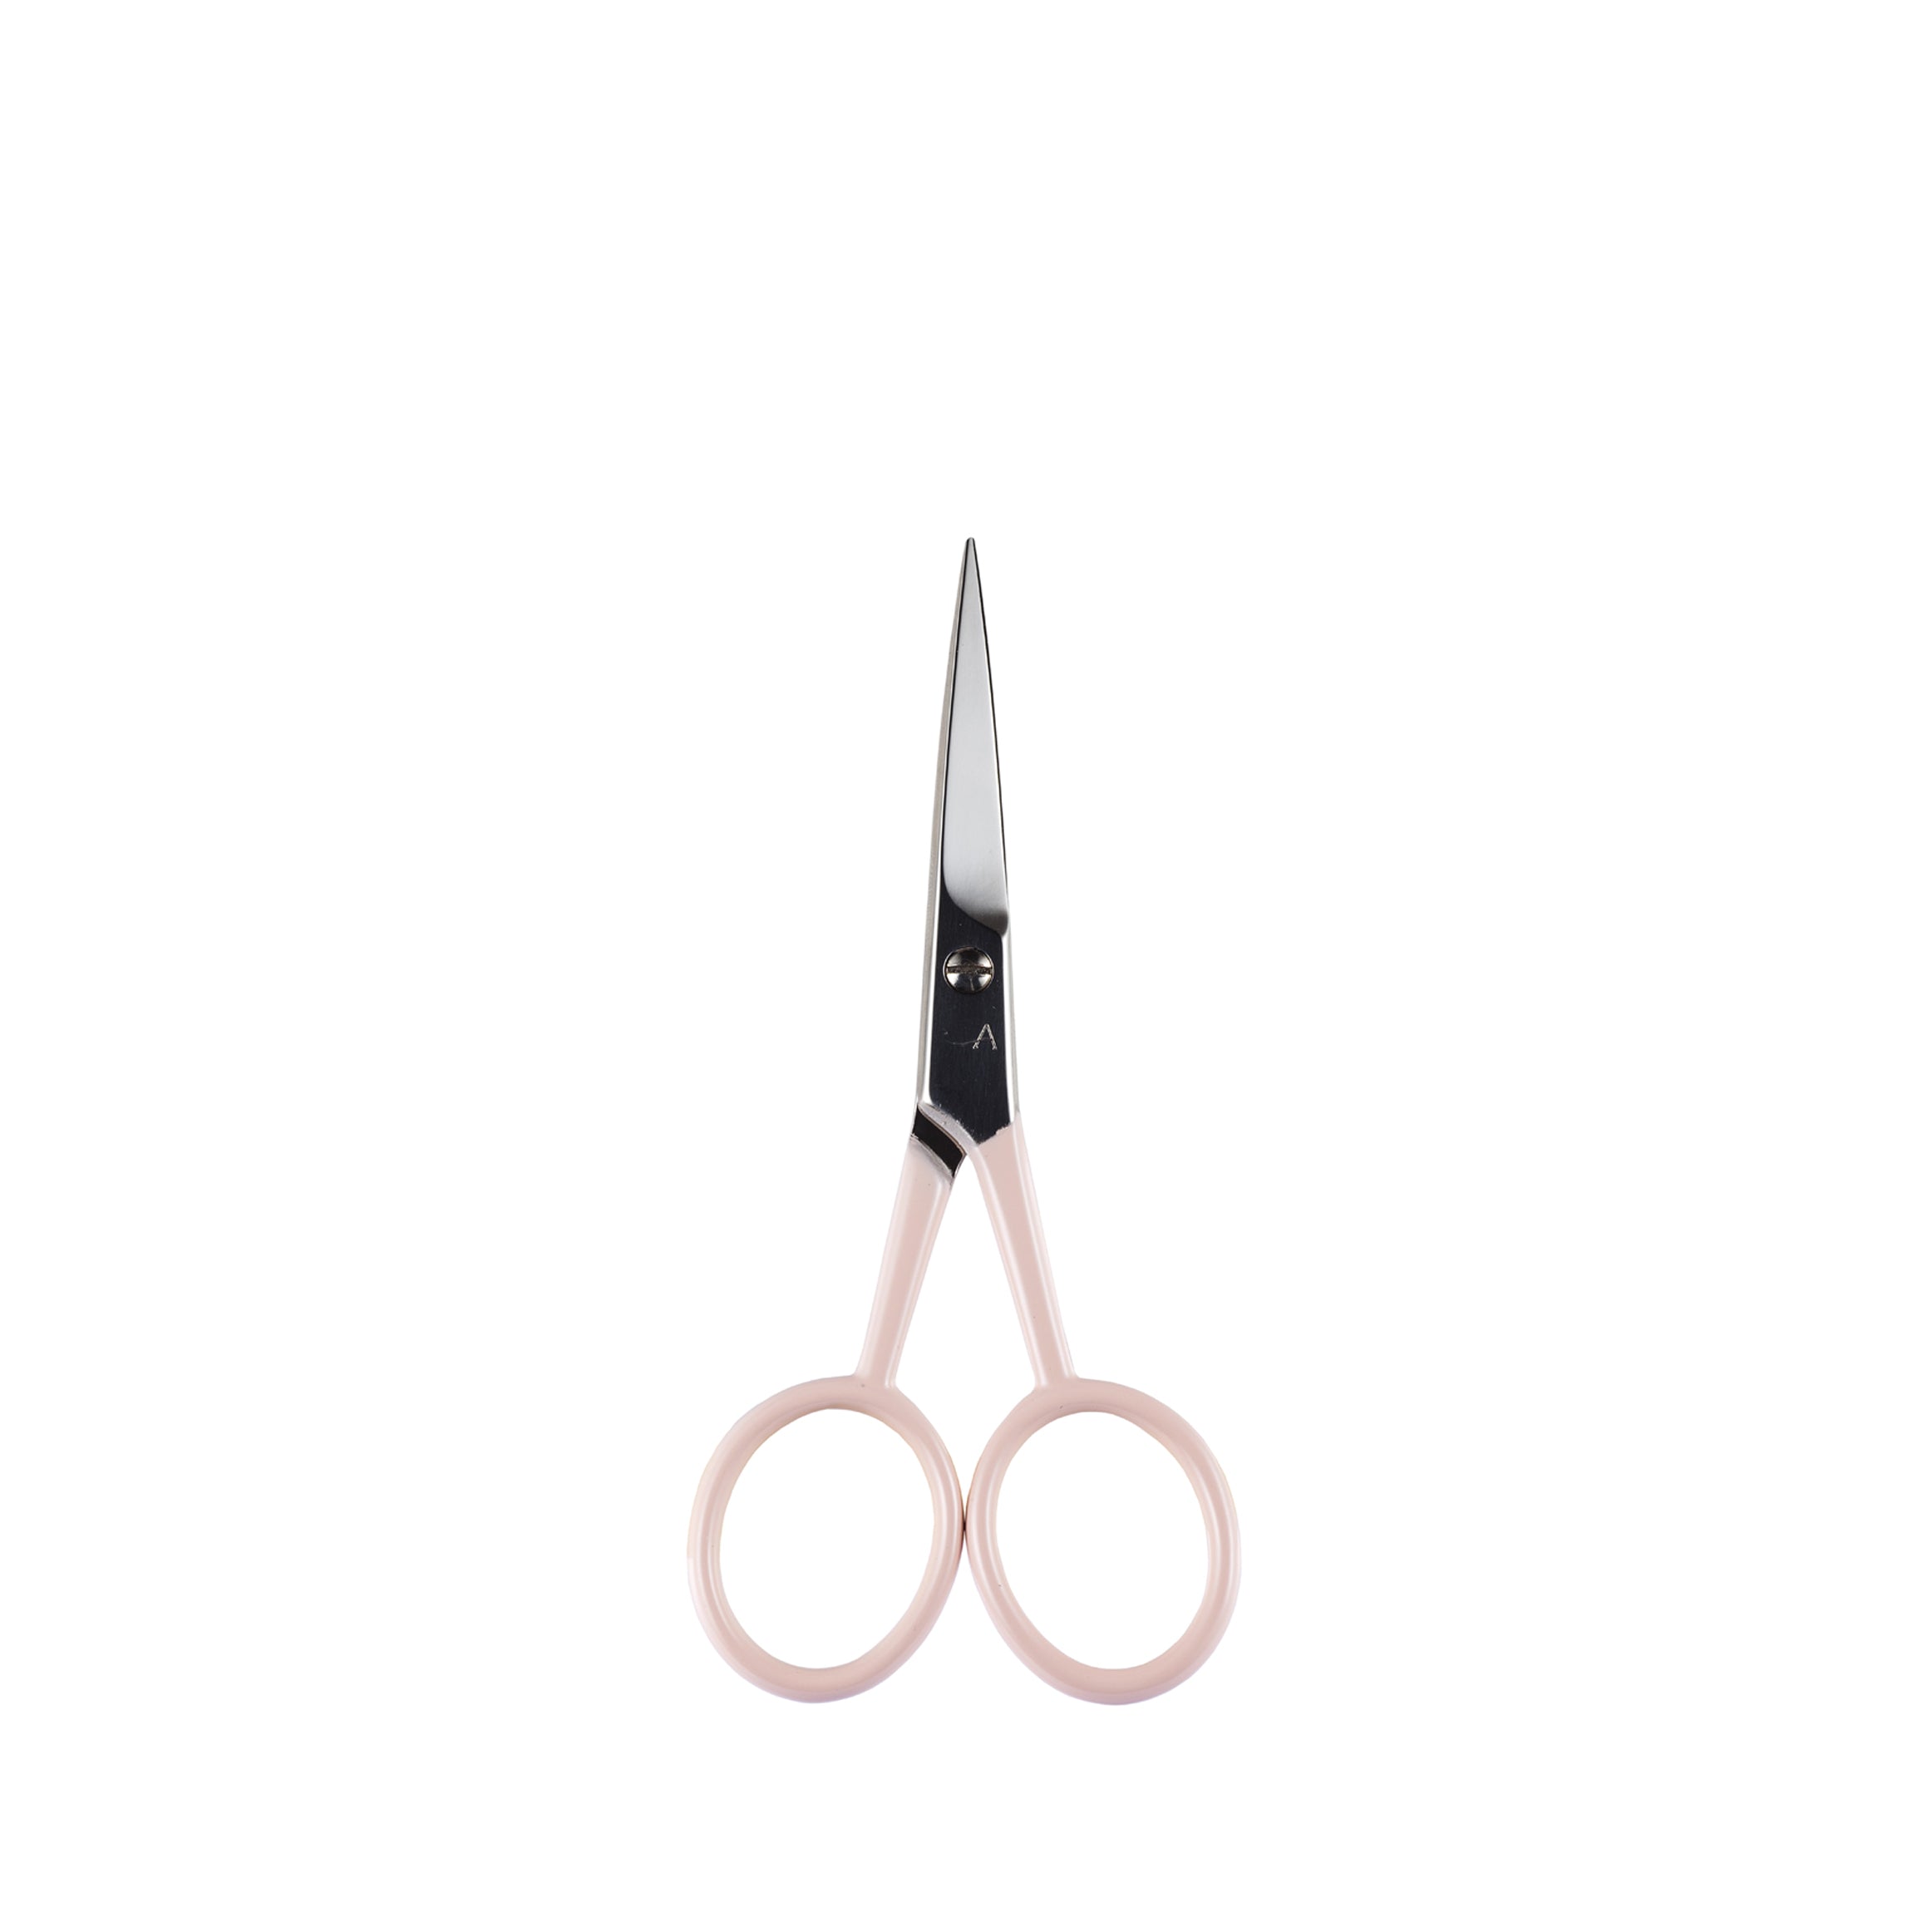 Anastasia Beverly Hills Scissors – The Beauty Editor